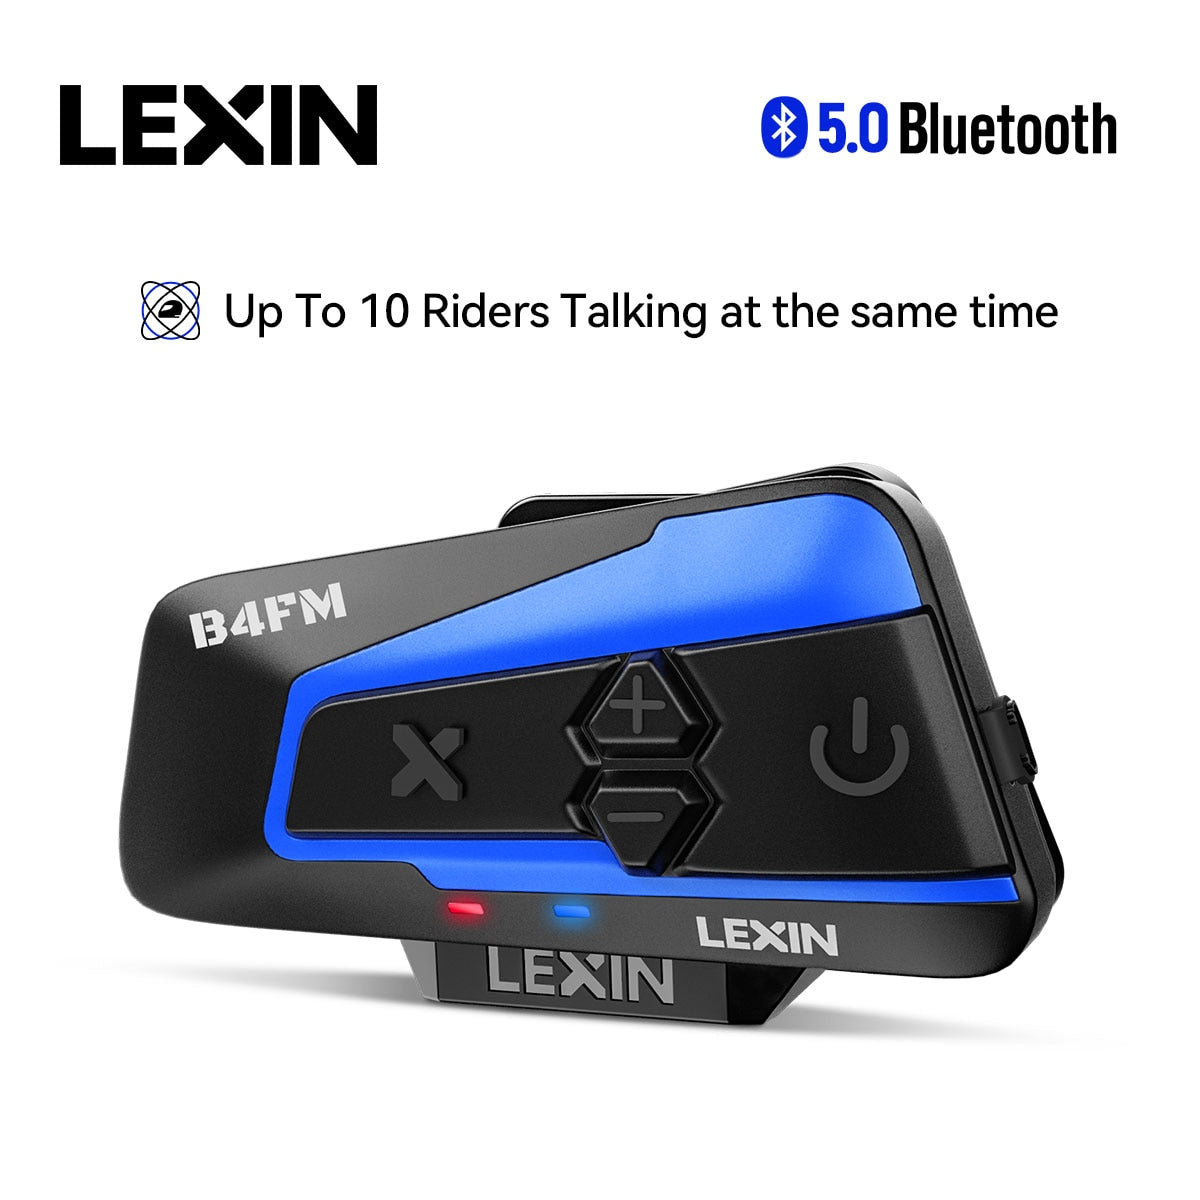 Brand Lexin LX-B4FM-X for 10 Riders Intercom Motorcycle Bluetooth Helmet Headsets BT Moto Intercomunicador with FM Radio - youronestopstore23